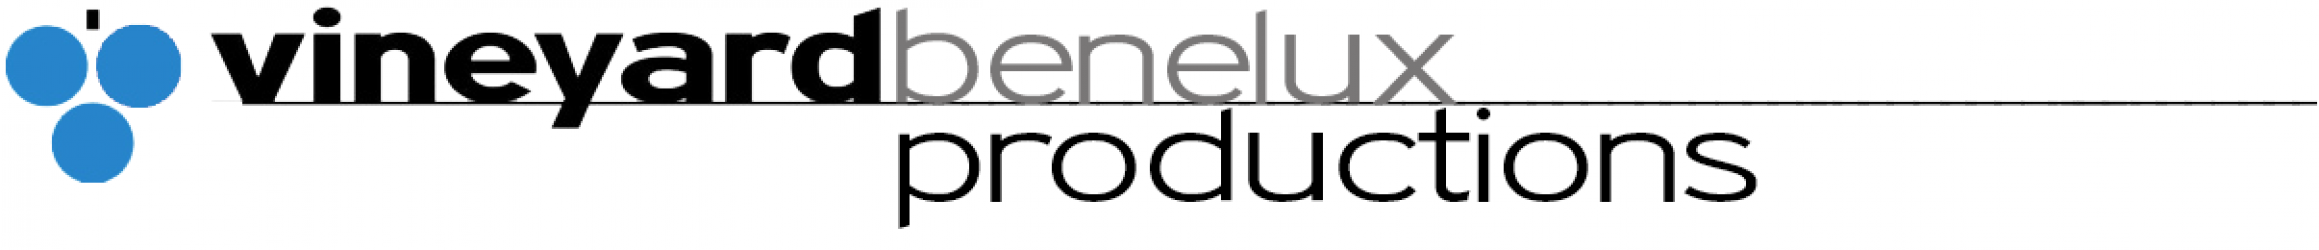 Vineyard Benelux Productions